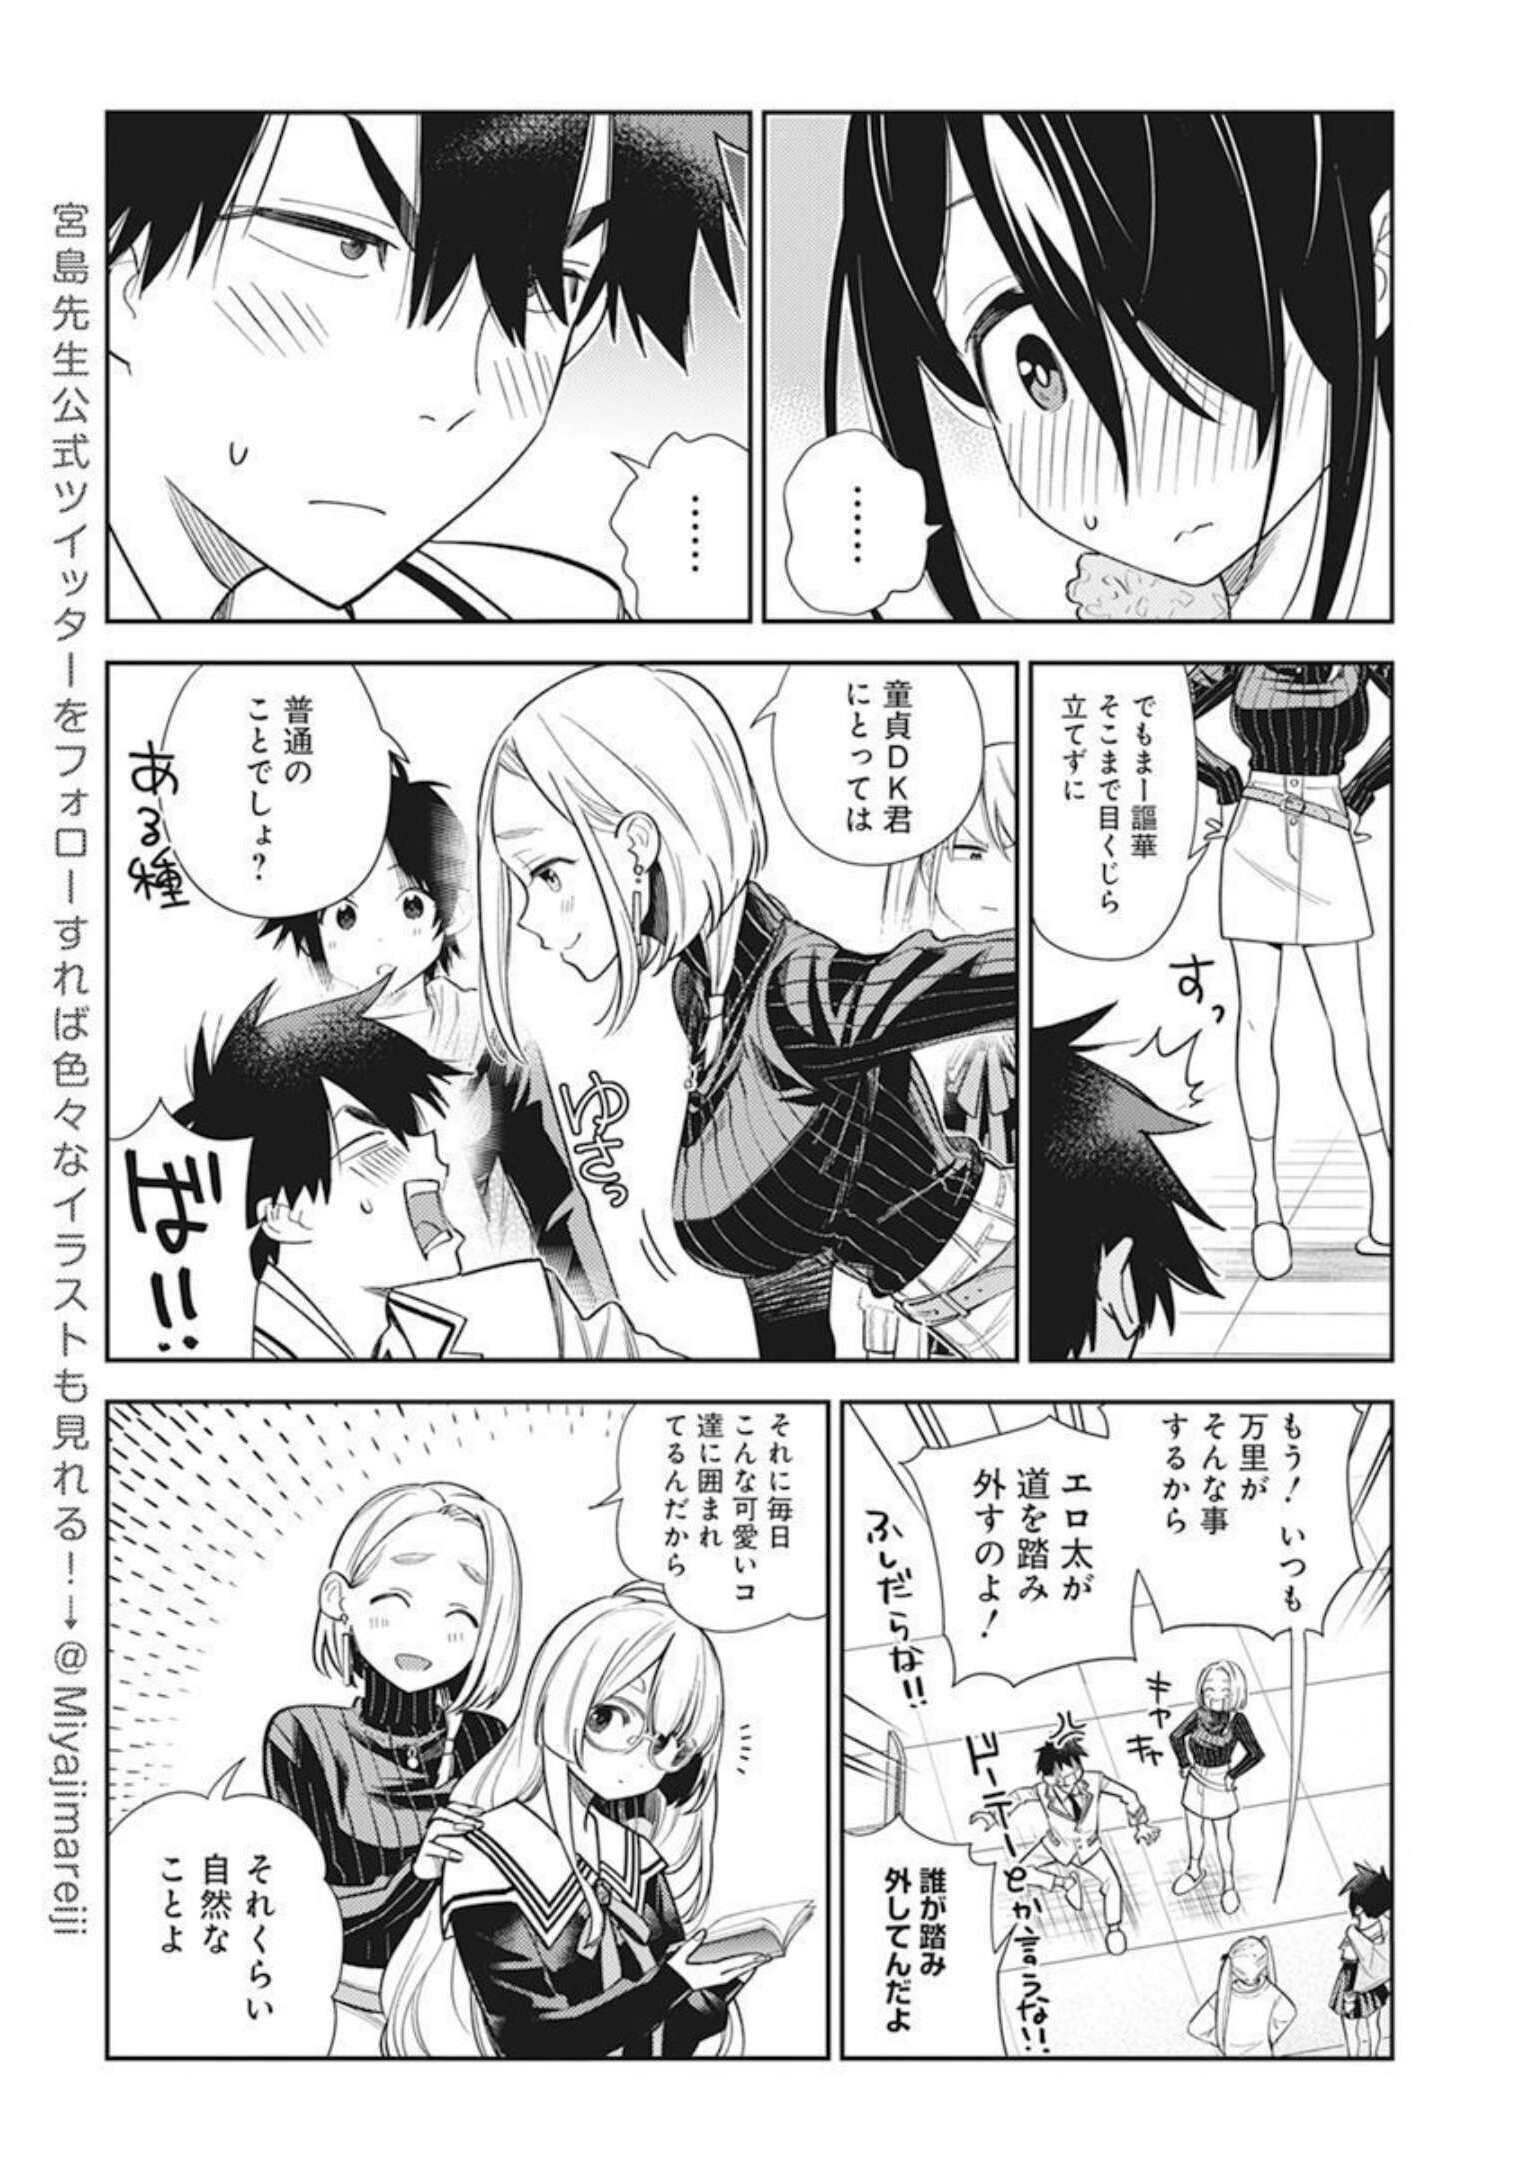 Shiunji-ke no Kodomotachi (Children of the Shiunji Family) - Chapter 01 - Page 13